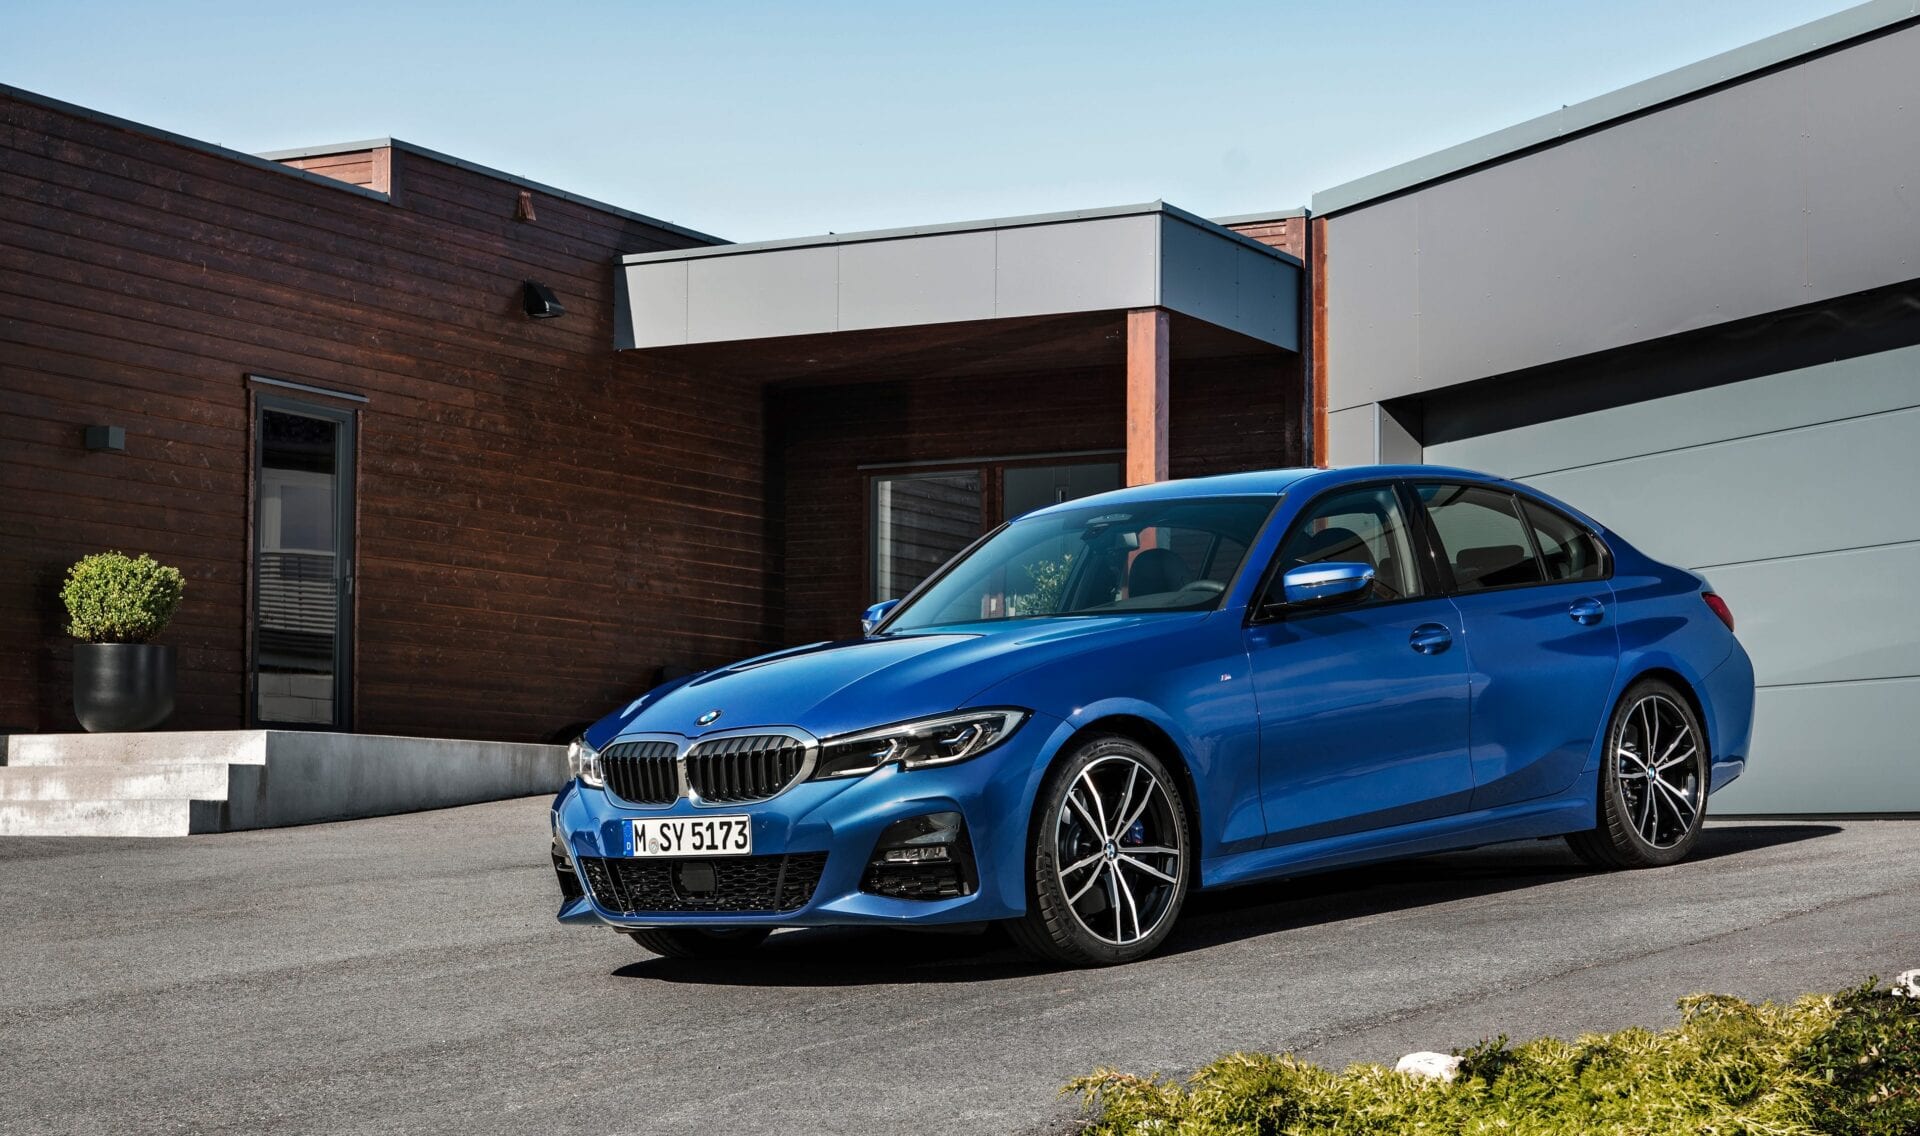 https://www.caetanocuzco.es/wp-content/uploads/2020/11/BMW-Serie-3-modelo-scaled.jpg